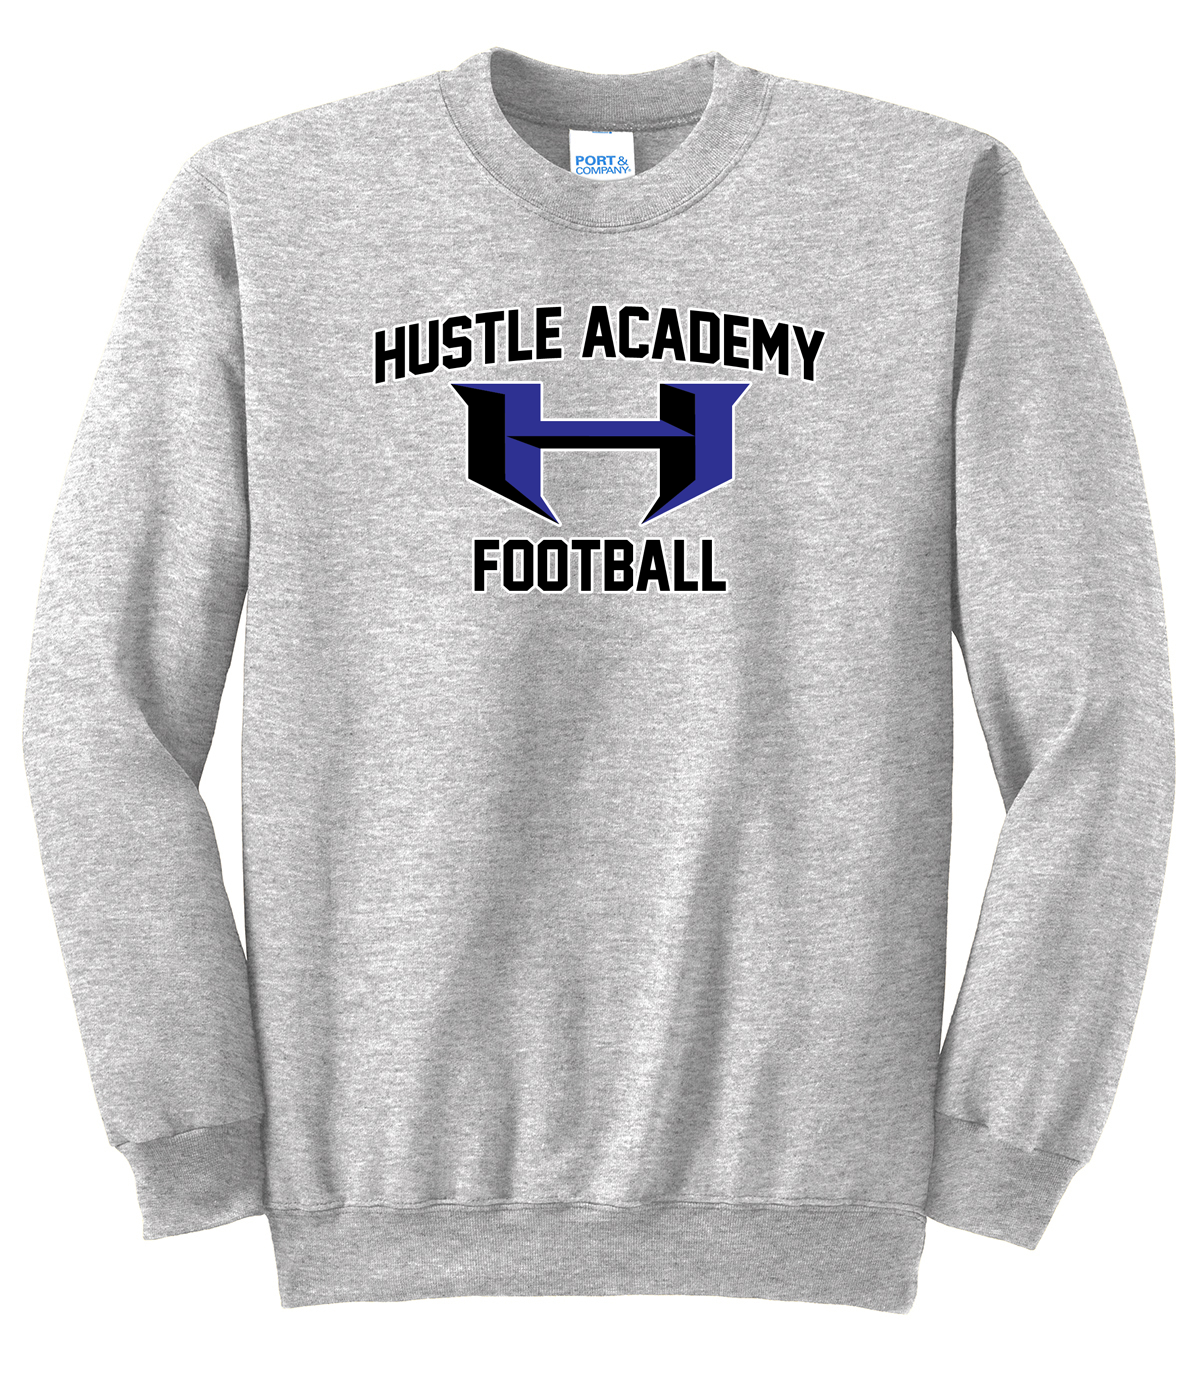 Hustle Academy Football Crew Neck Sweater